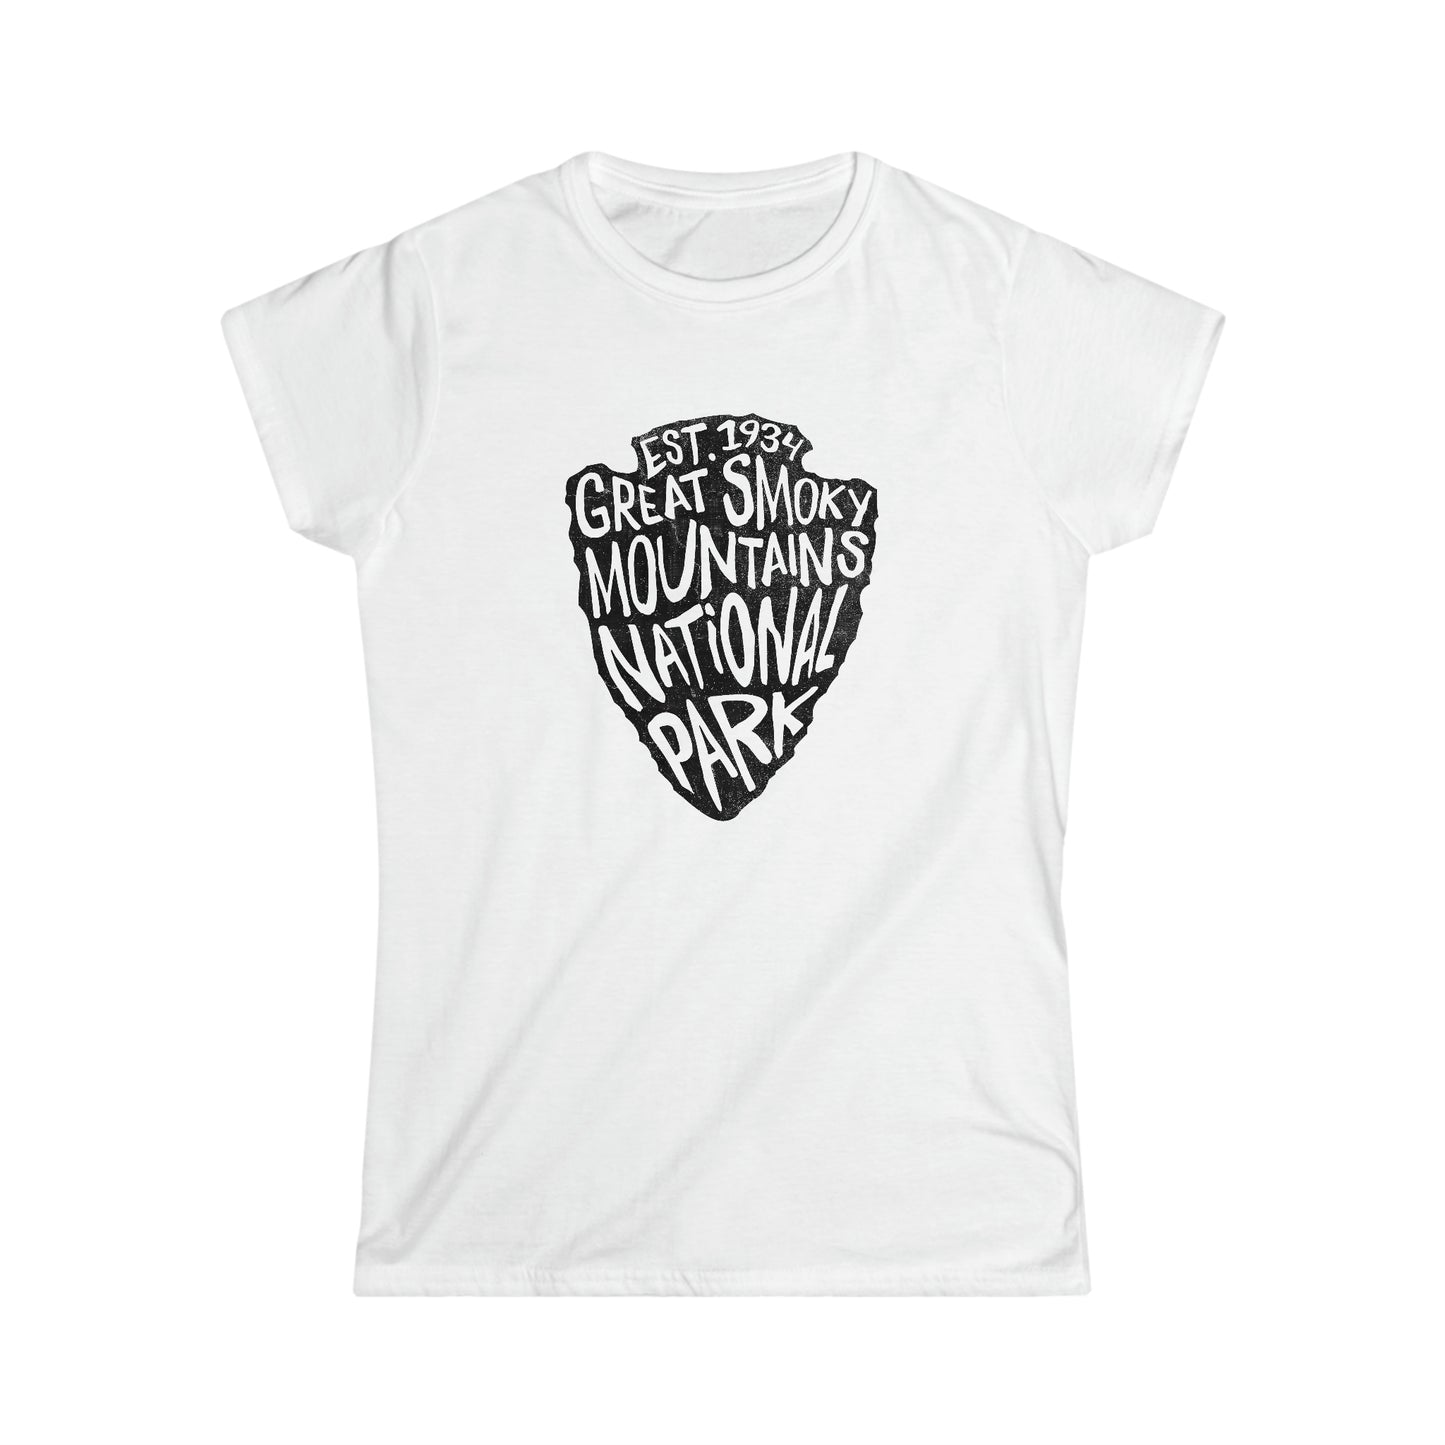 Great Smoky Mountains National Park Women's T-Shirt - Arrowhead Design